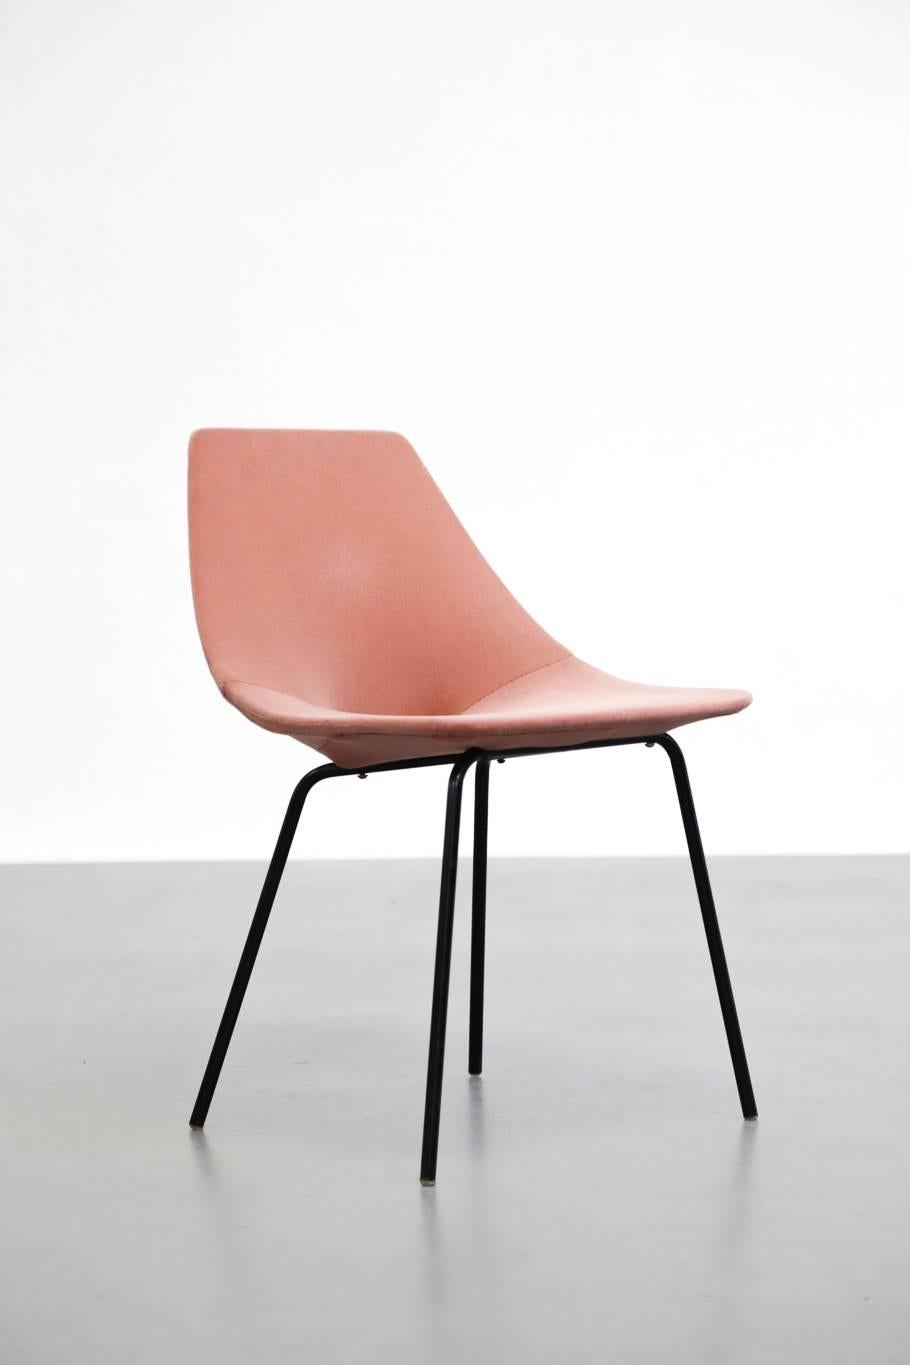 Metal Tonneau Chair by Pierre Guariche for Steiner